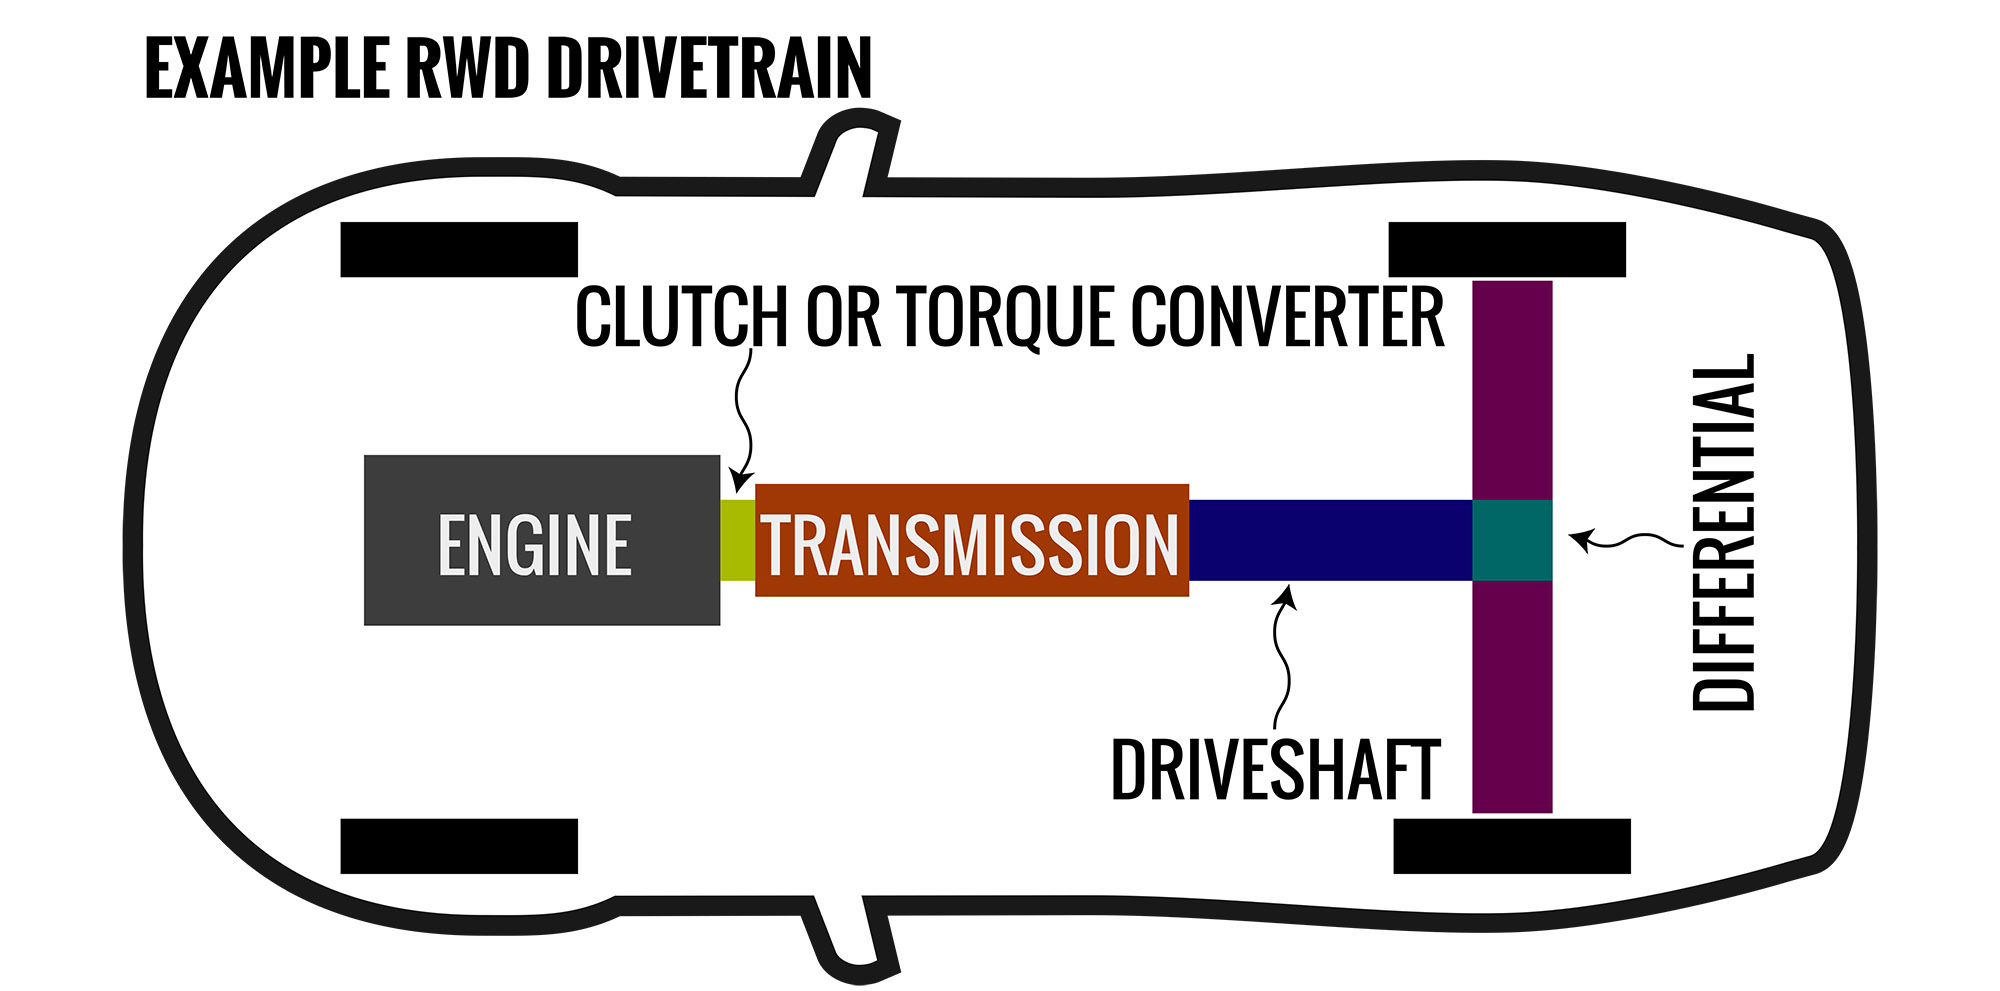 The diagram shows how a drivetrain operates.